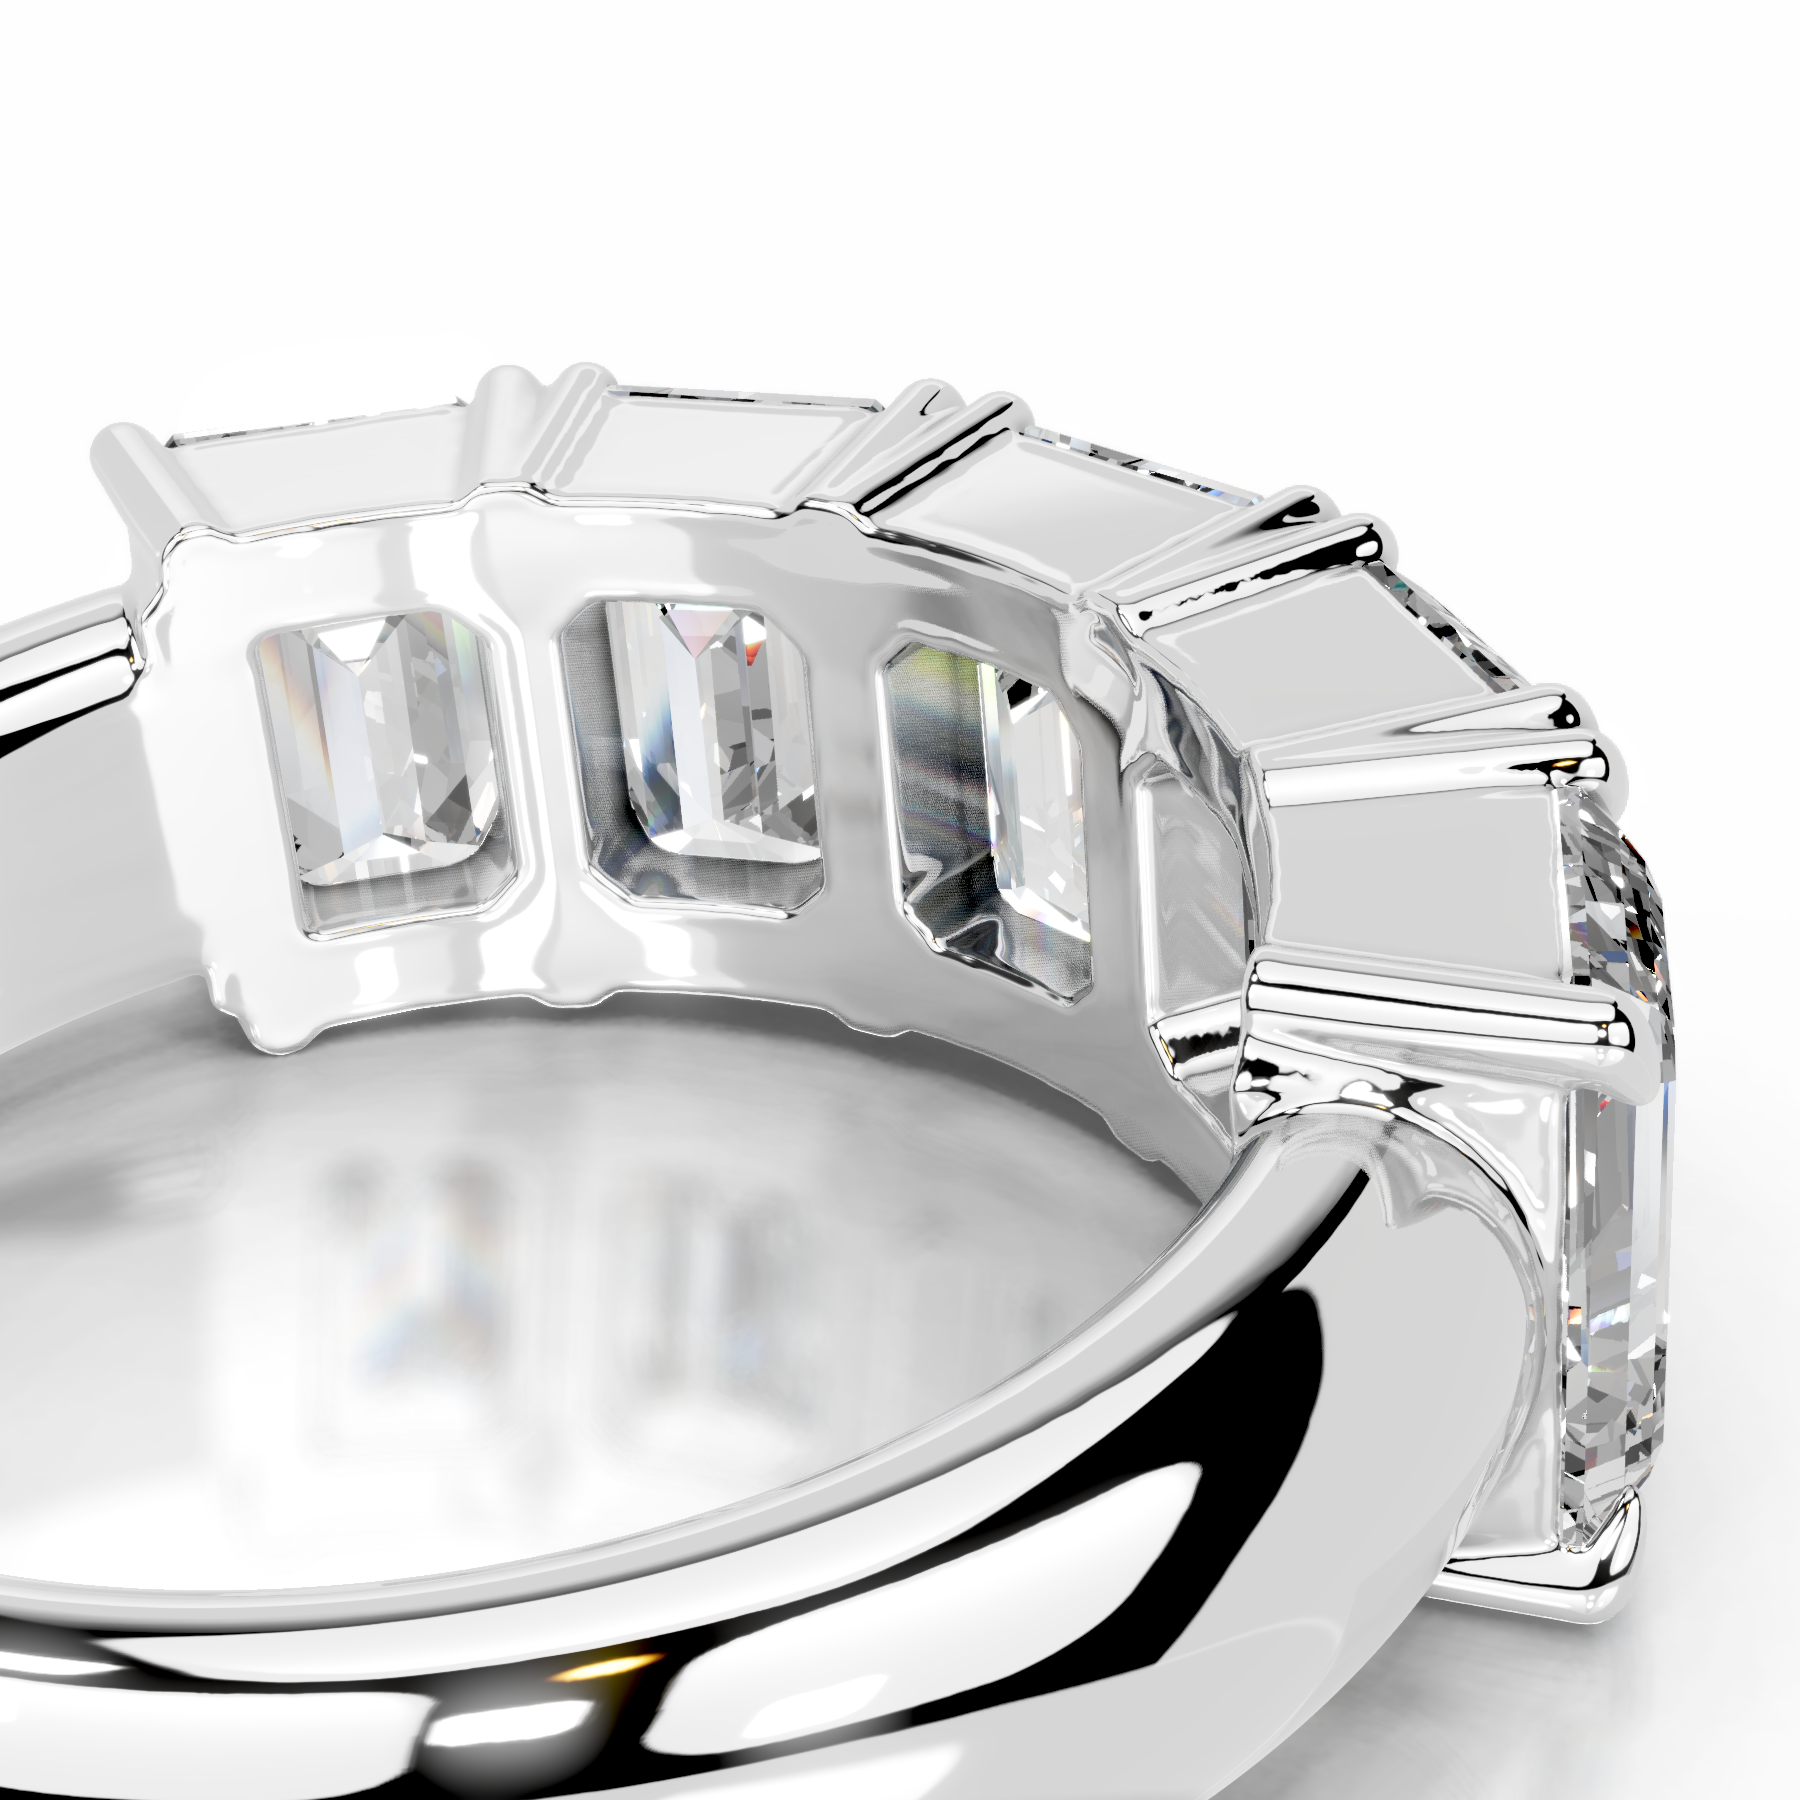 Shandra Diamond Wedding Ring   (2.5 Carat) -Platinum